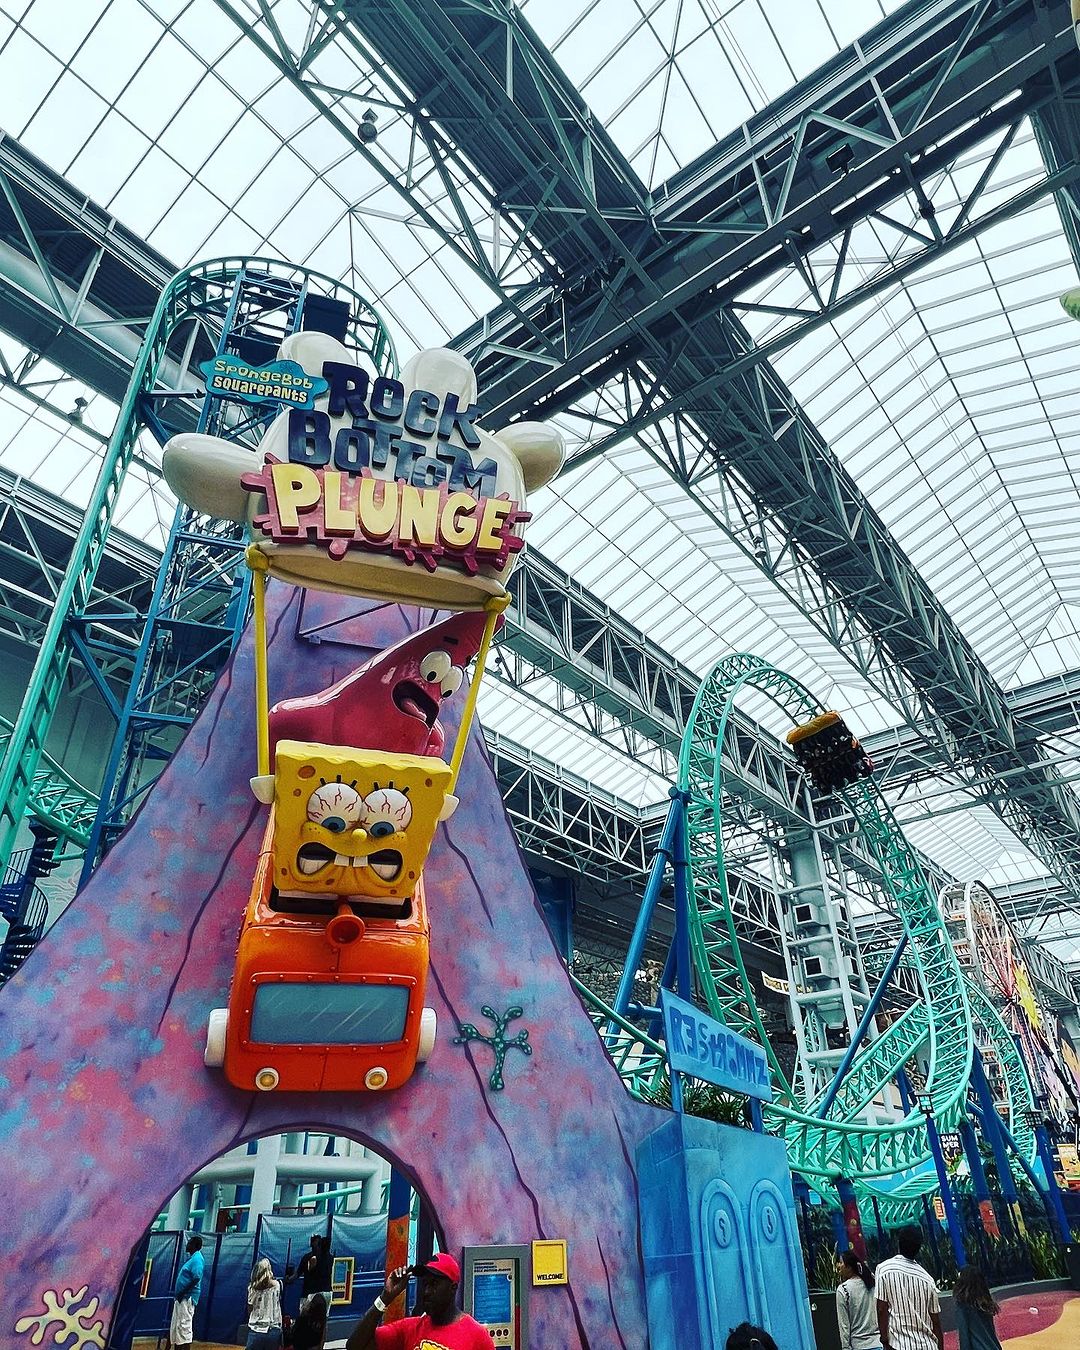 Rock Bottom Plunge Roller Coaster At Nickelodeon Universe